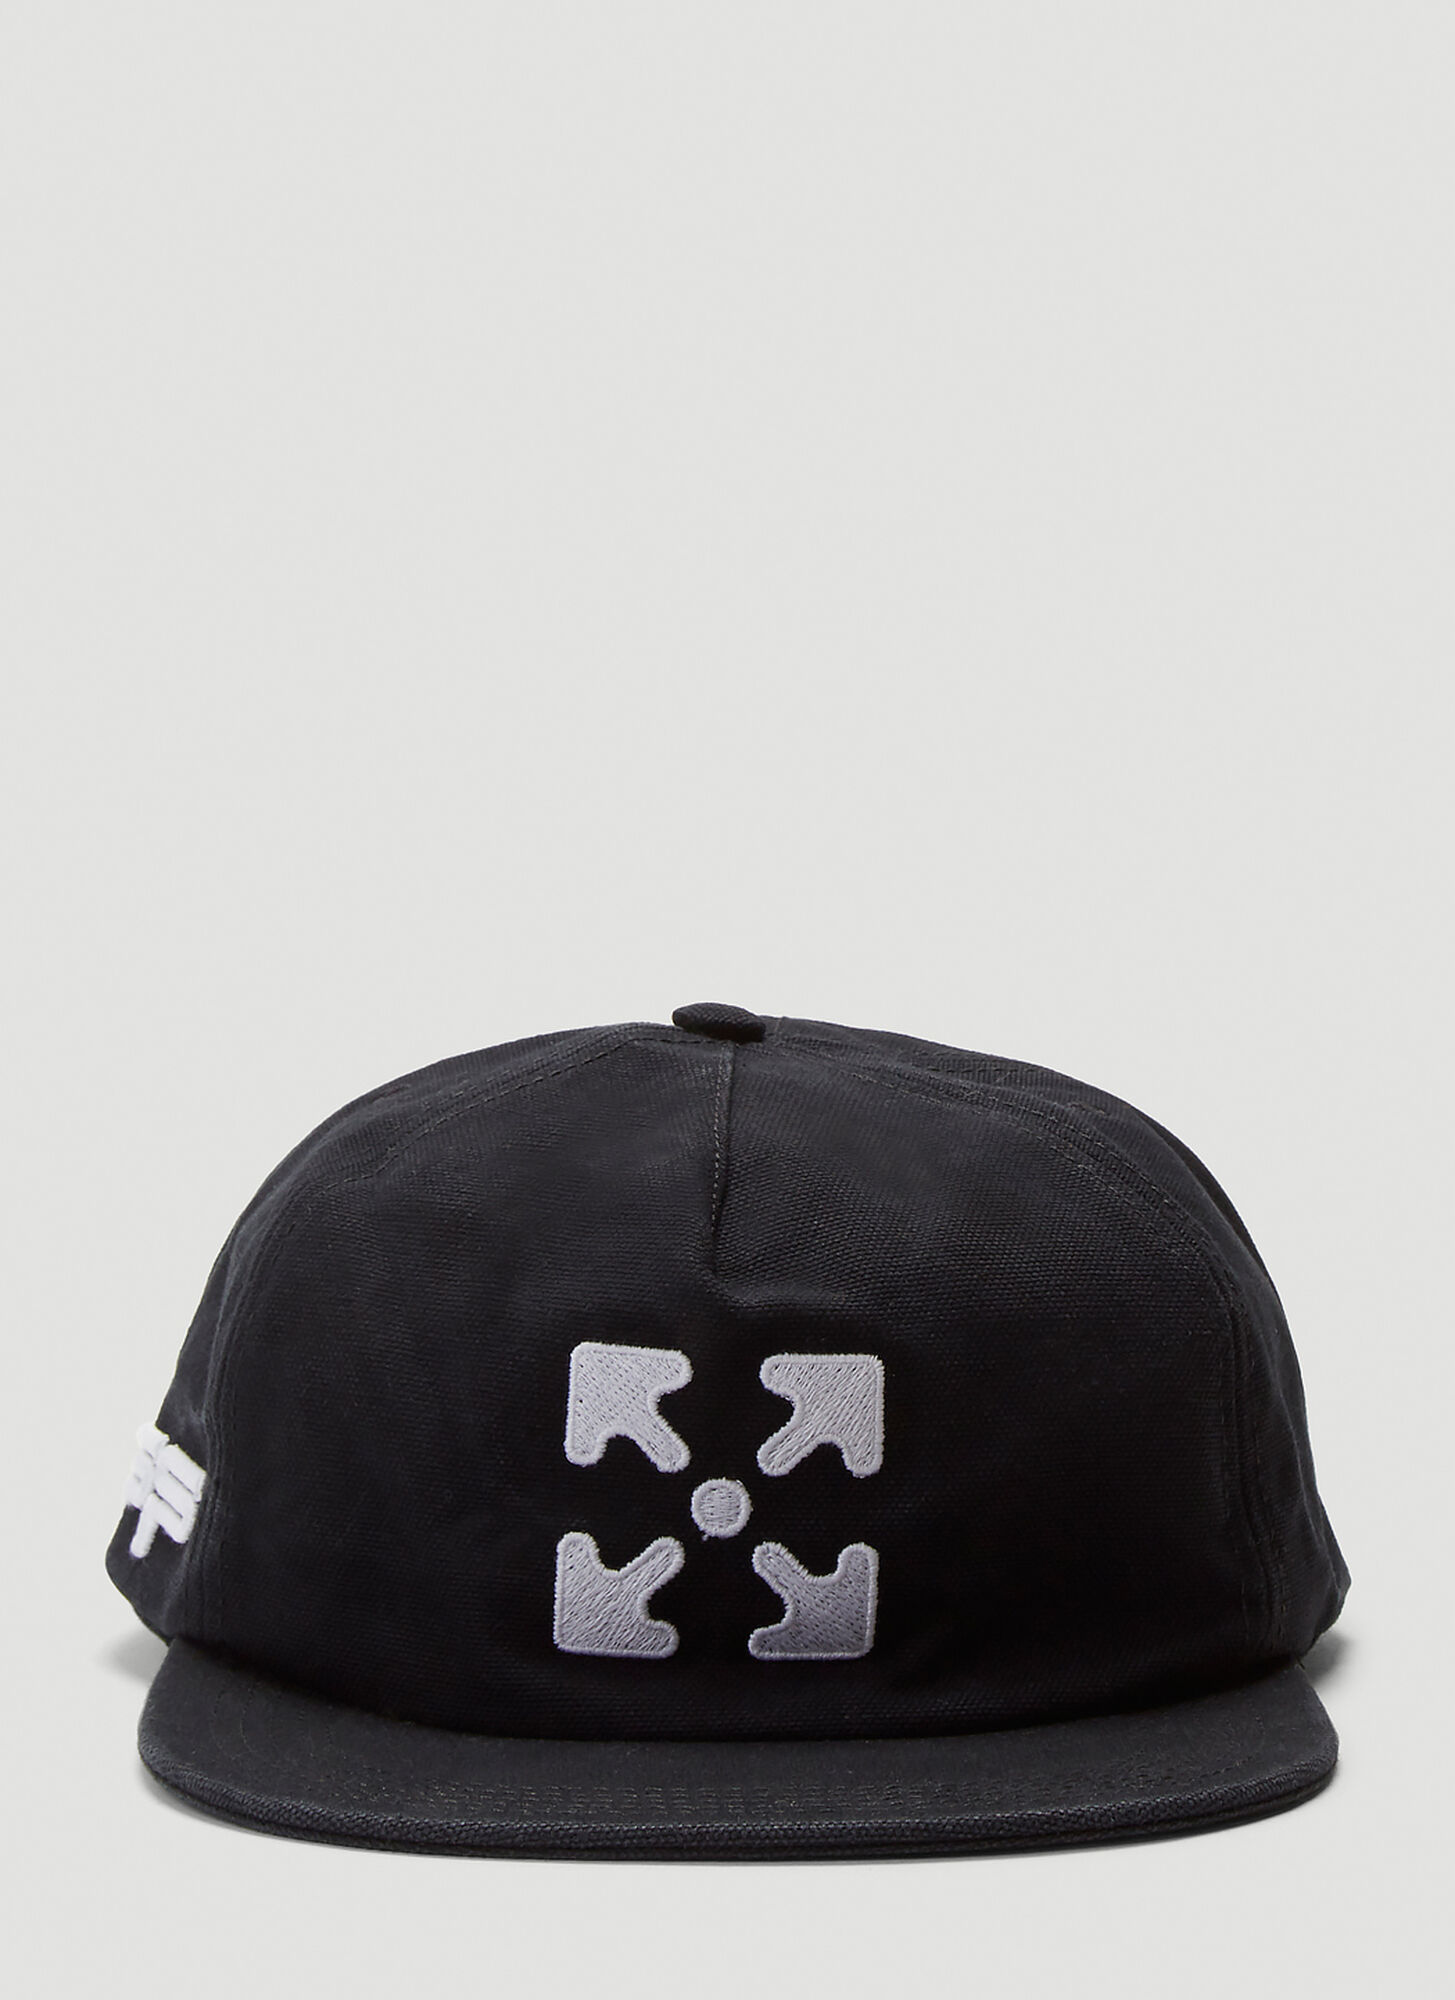 Off-White Arrow Logo Cap in Black size One Size | The Fashionisto